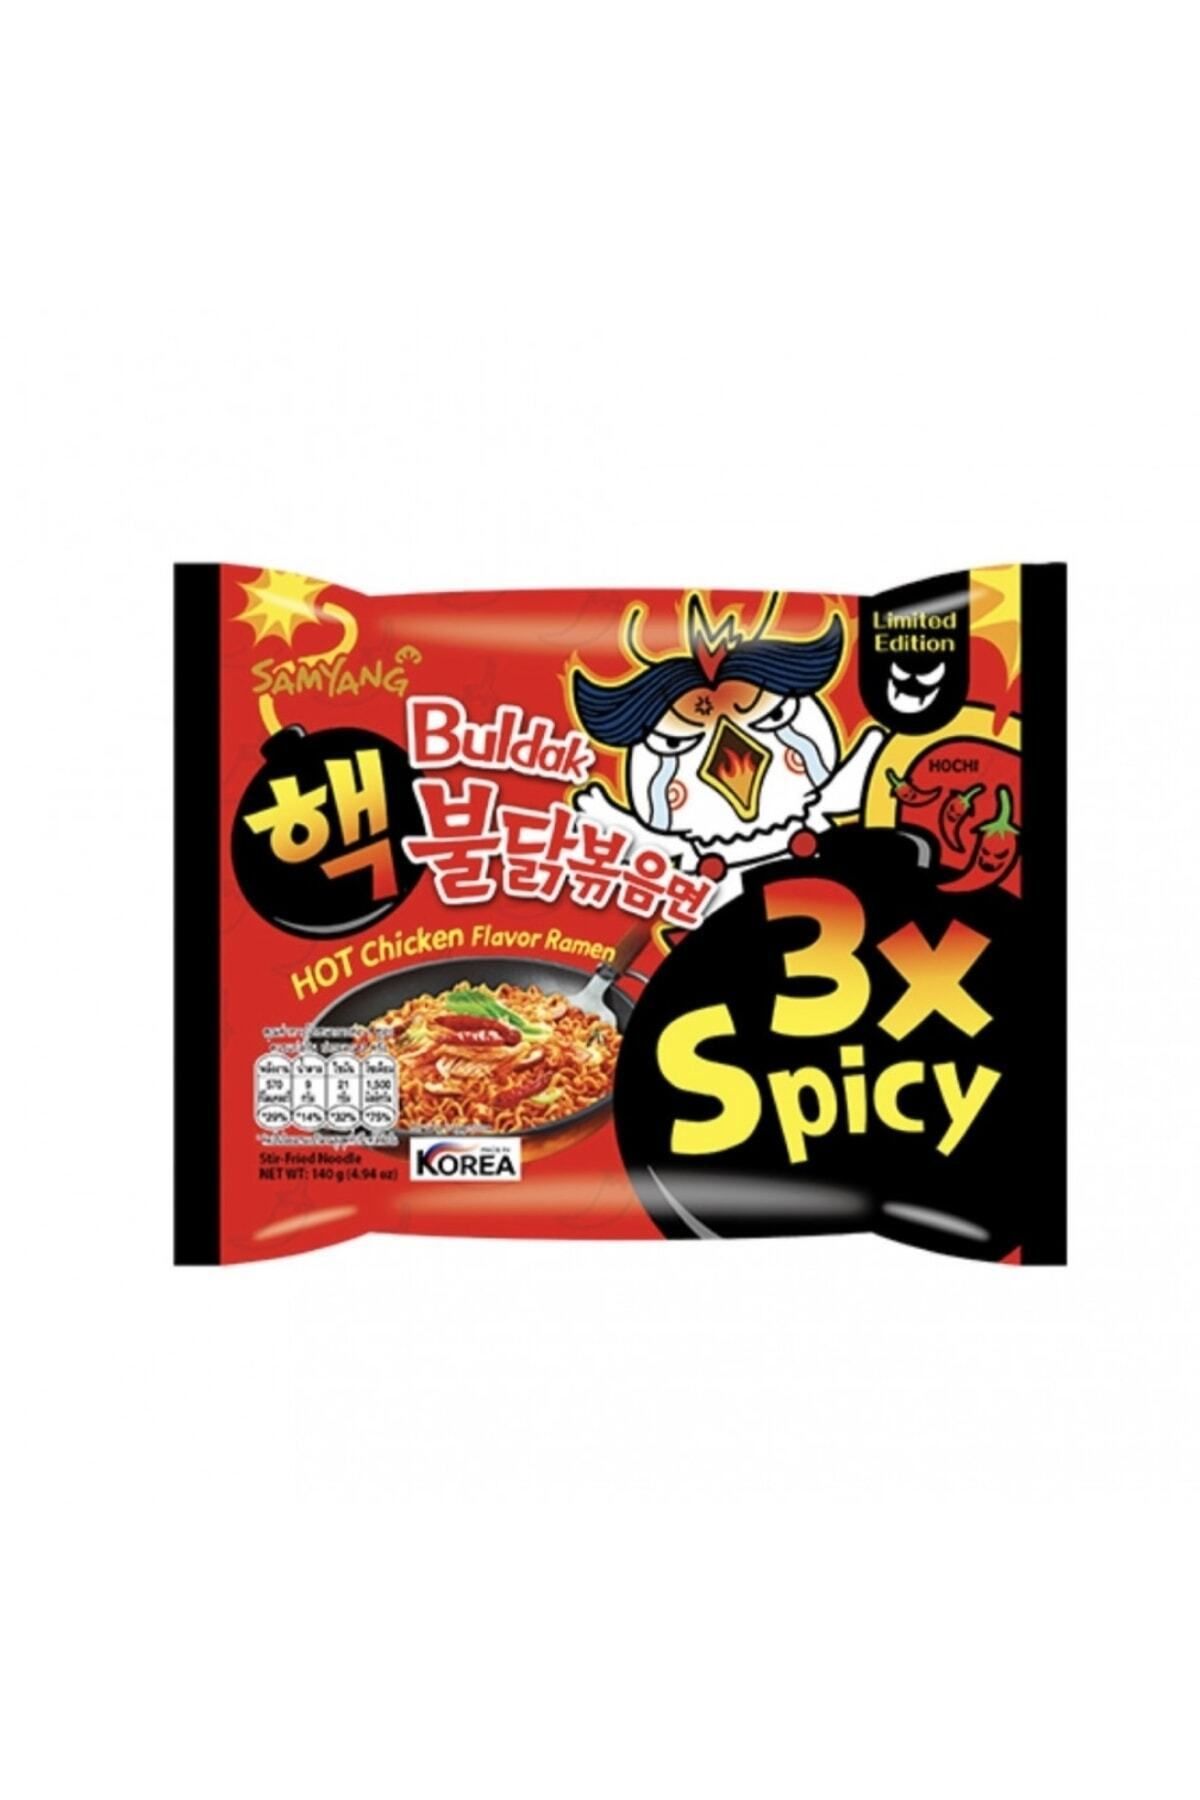 samyang Buldak 3x Spicy Noodle Kore